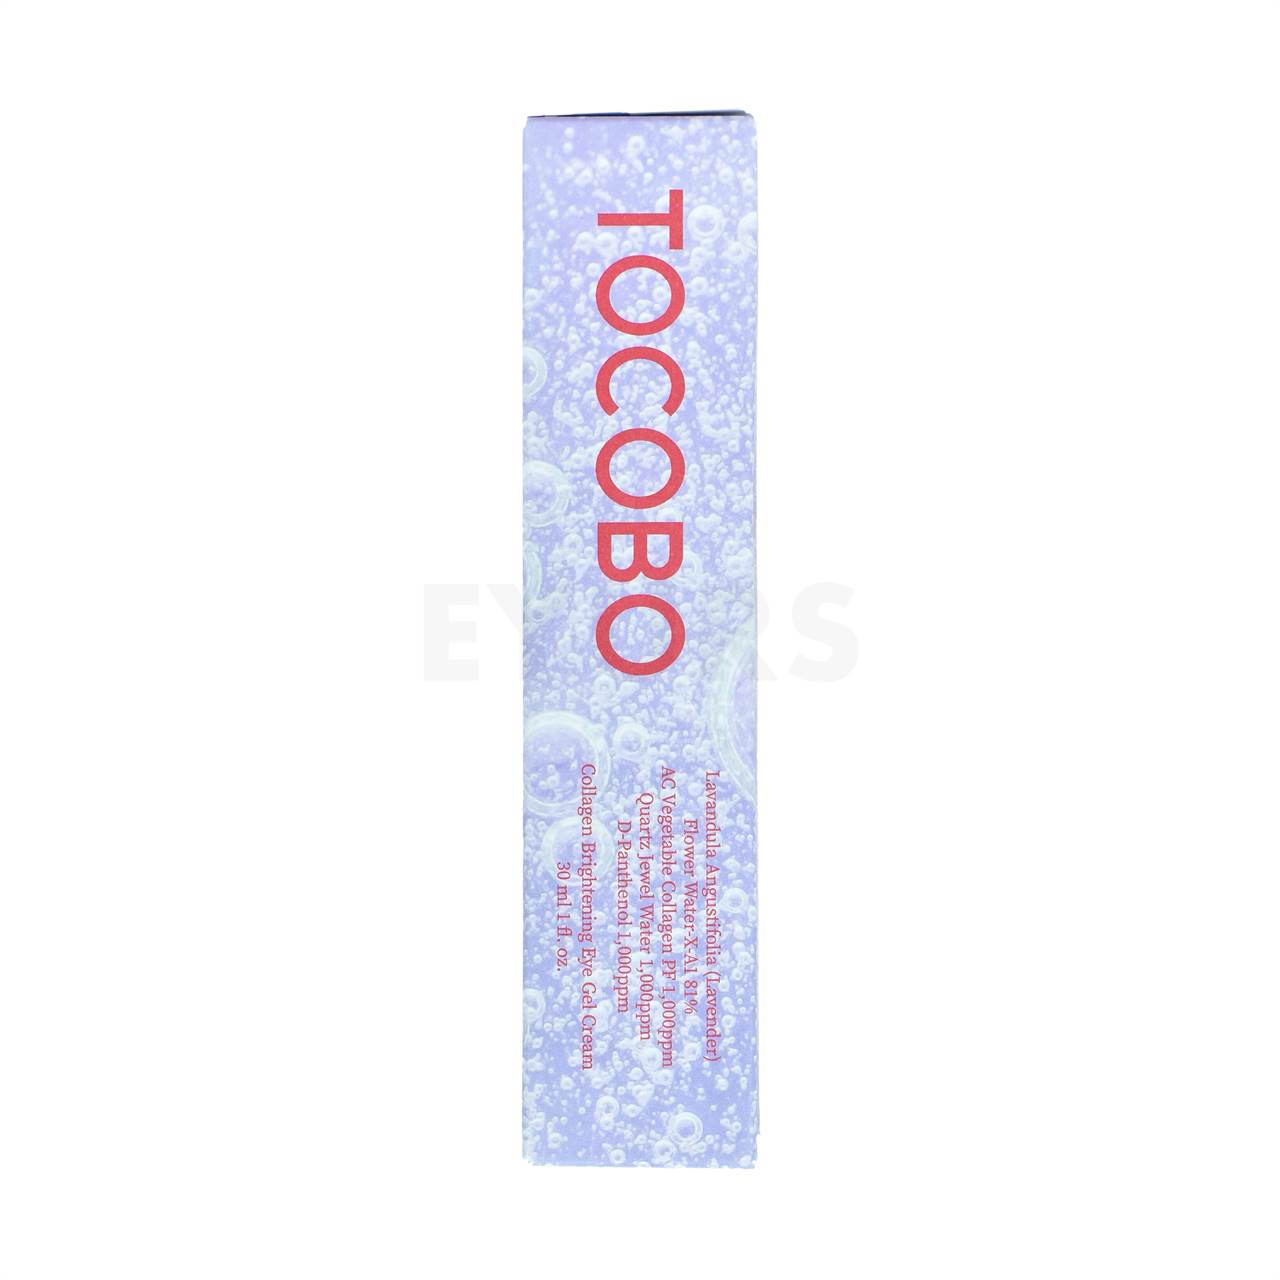 tocobo collagen brightening eye gel cream 30ml front side packaging